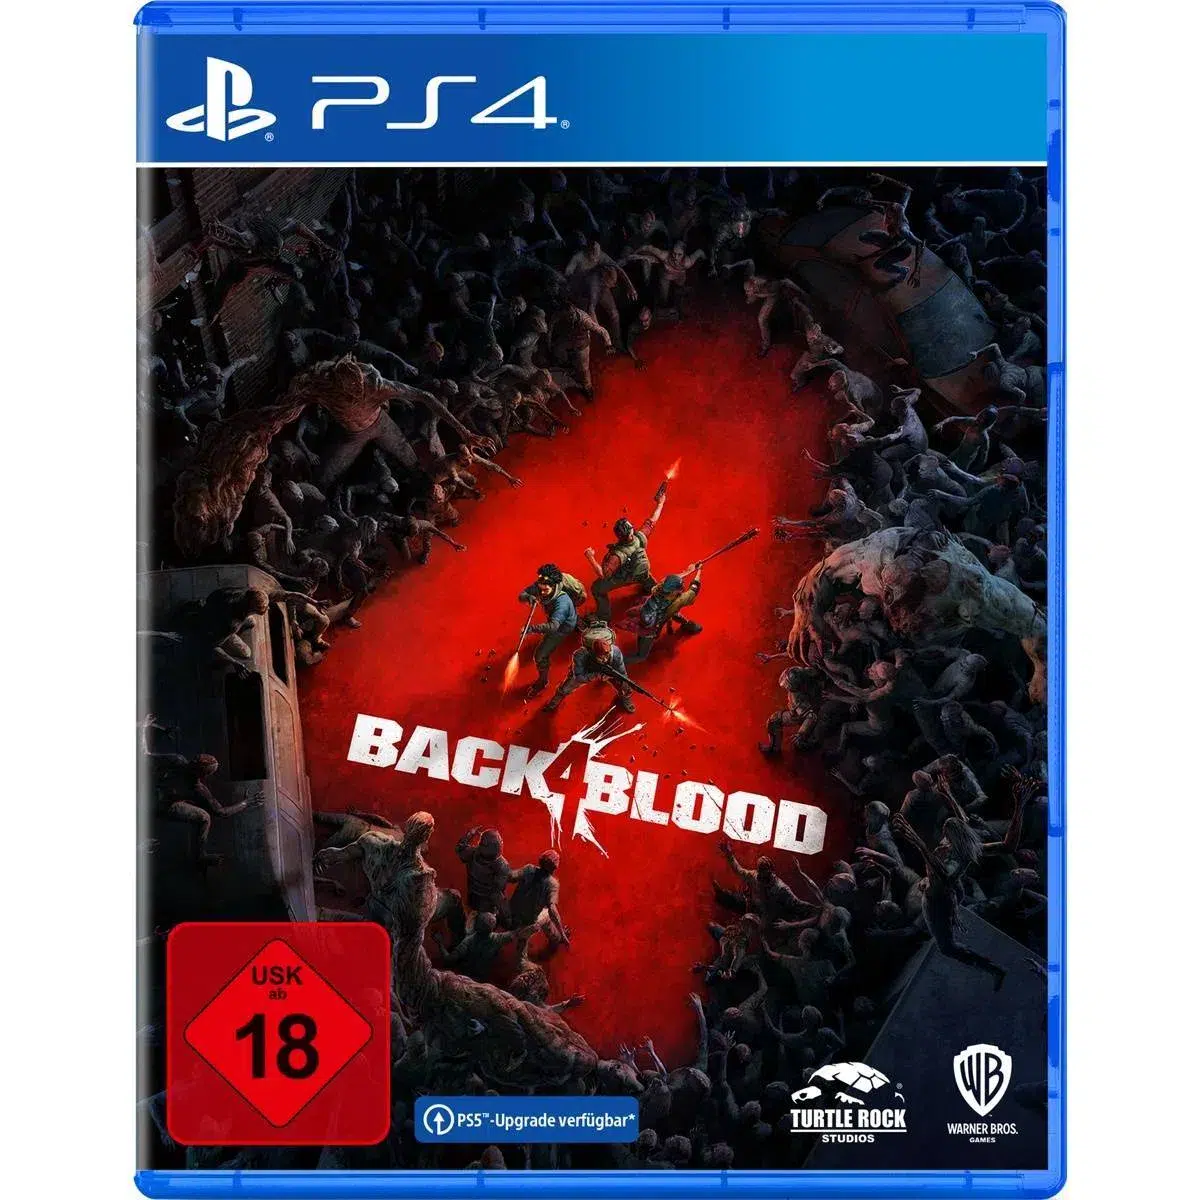 Back 4 Blood - PS4